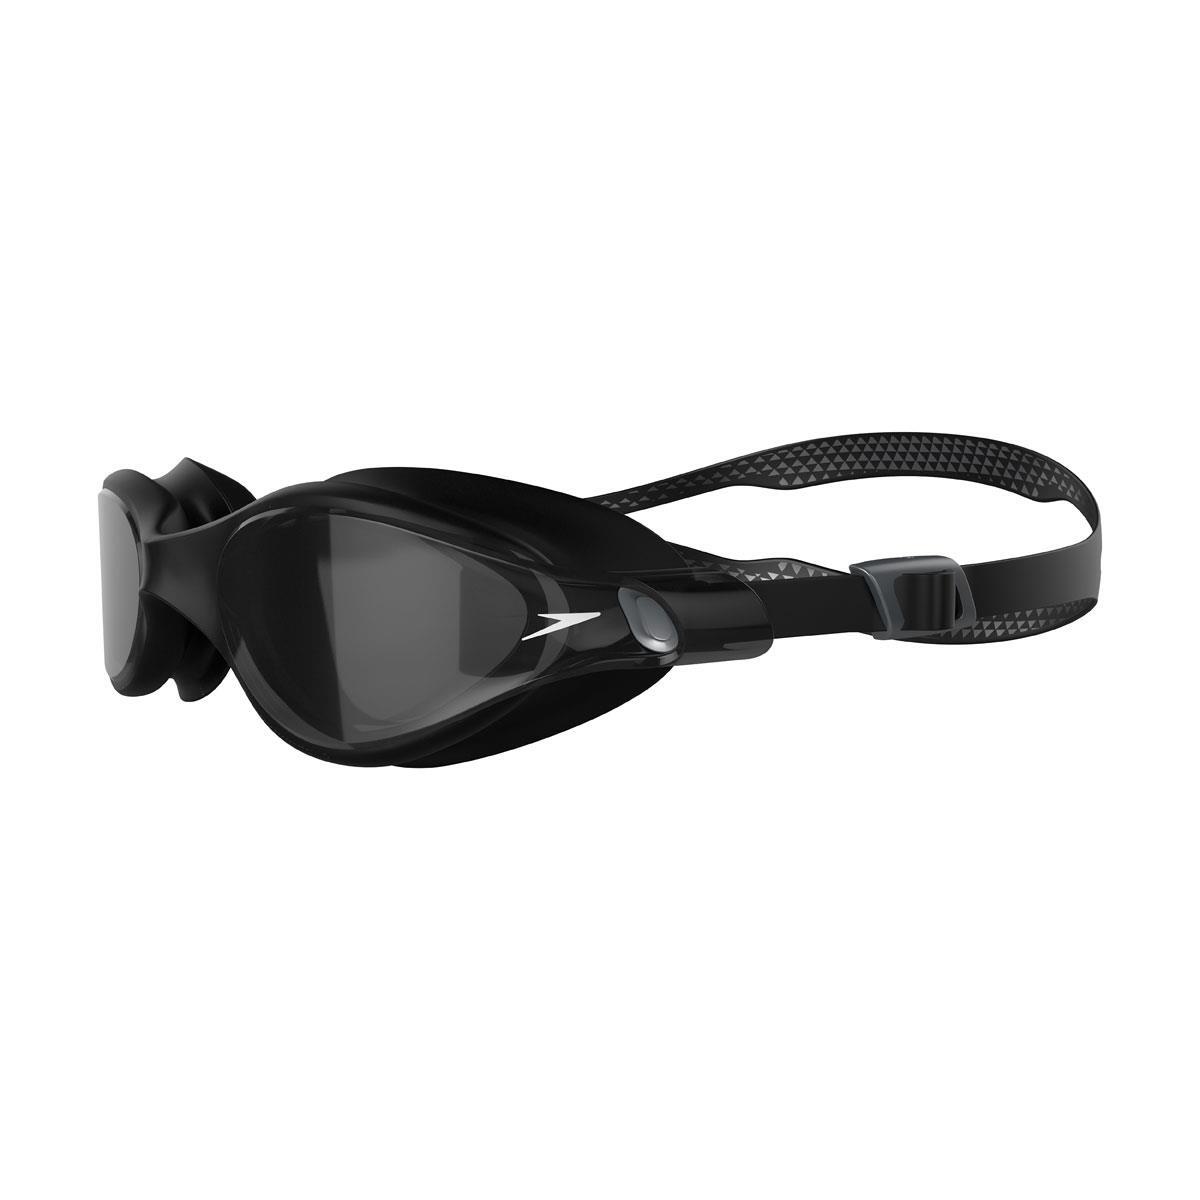 Speedo Vue Goggles - Black/ Silver/ Light Smoke 1/4